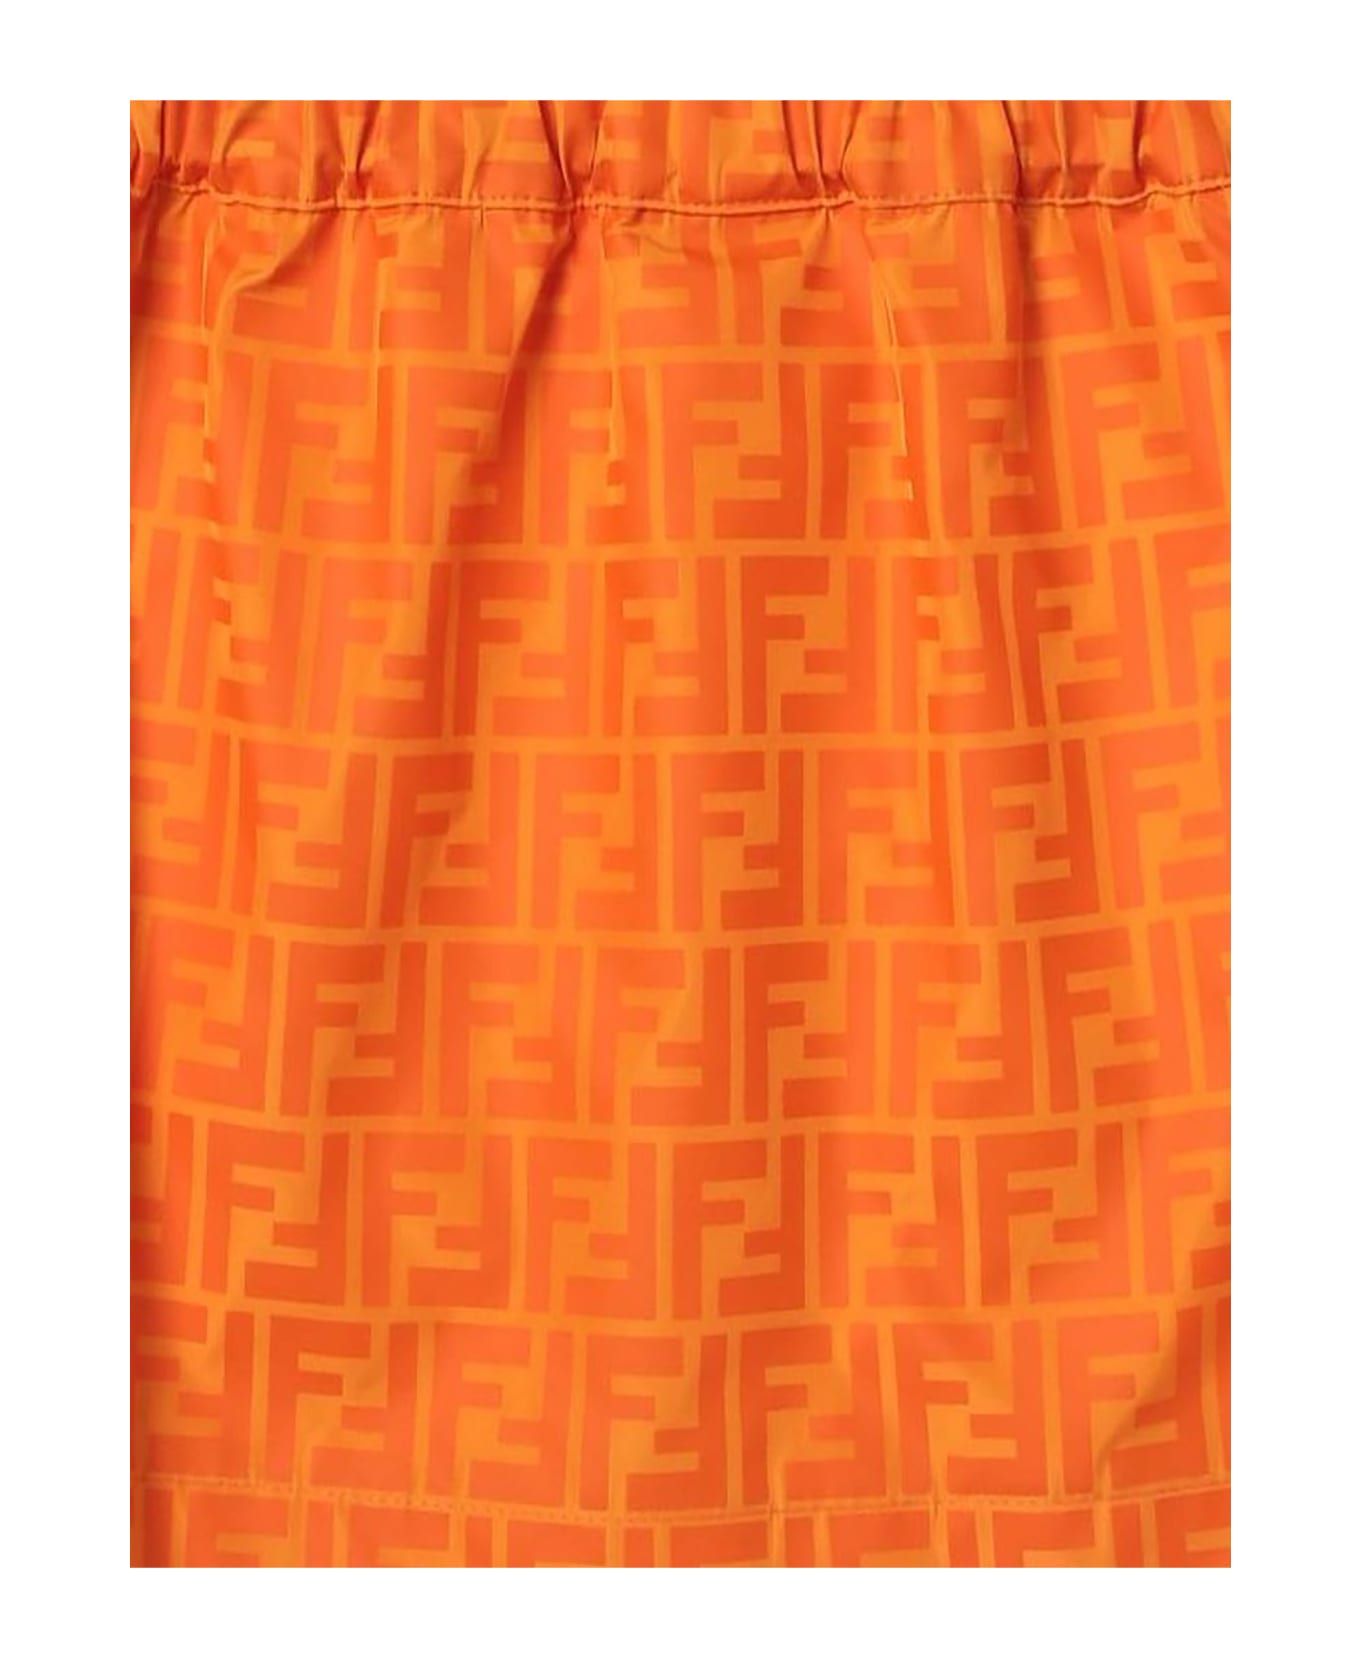 Fendi Orange Polyamide Skirt - Arancio